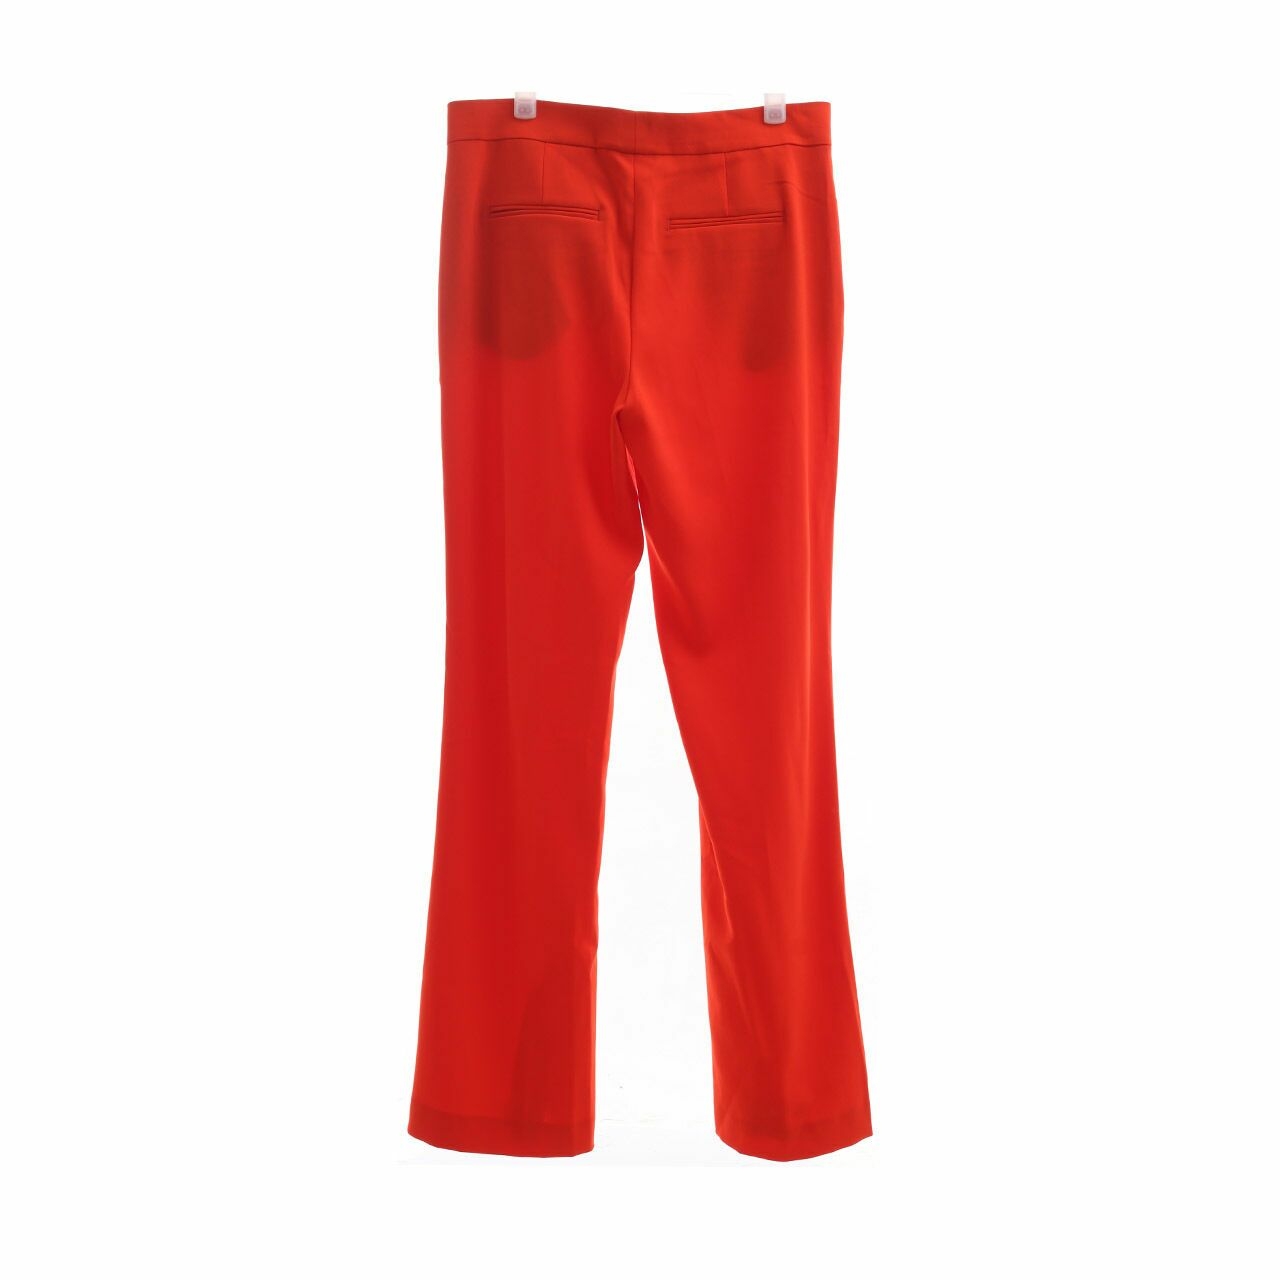 Zara Orange Trousers